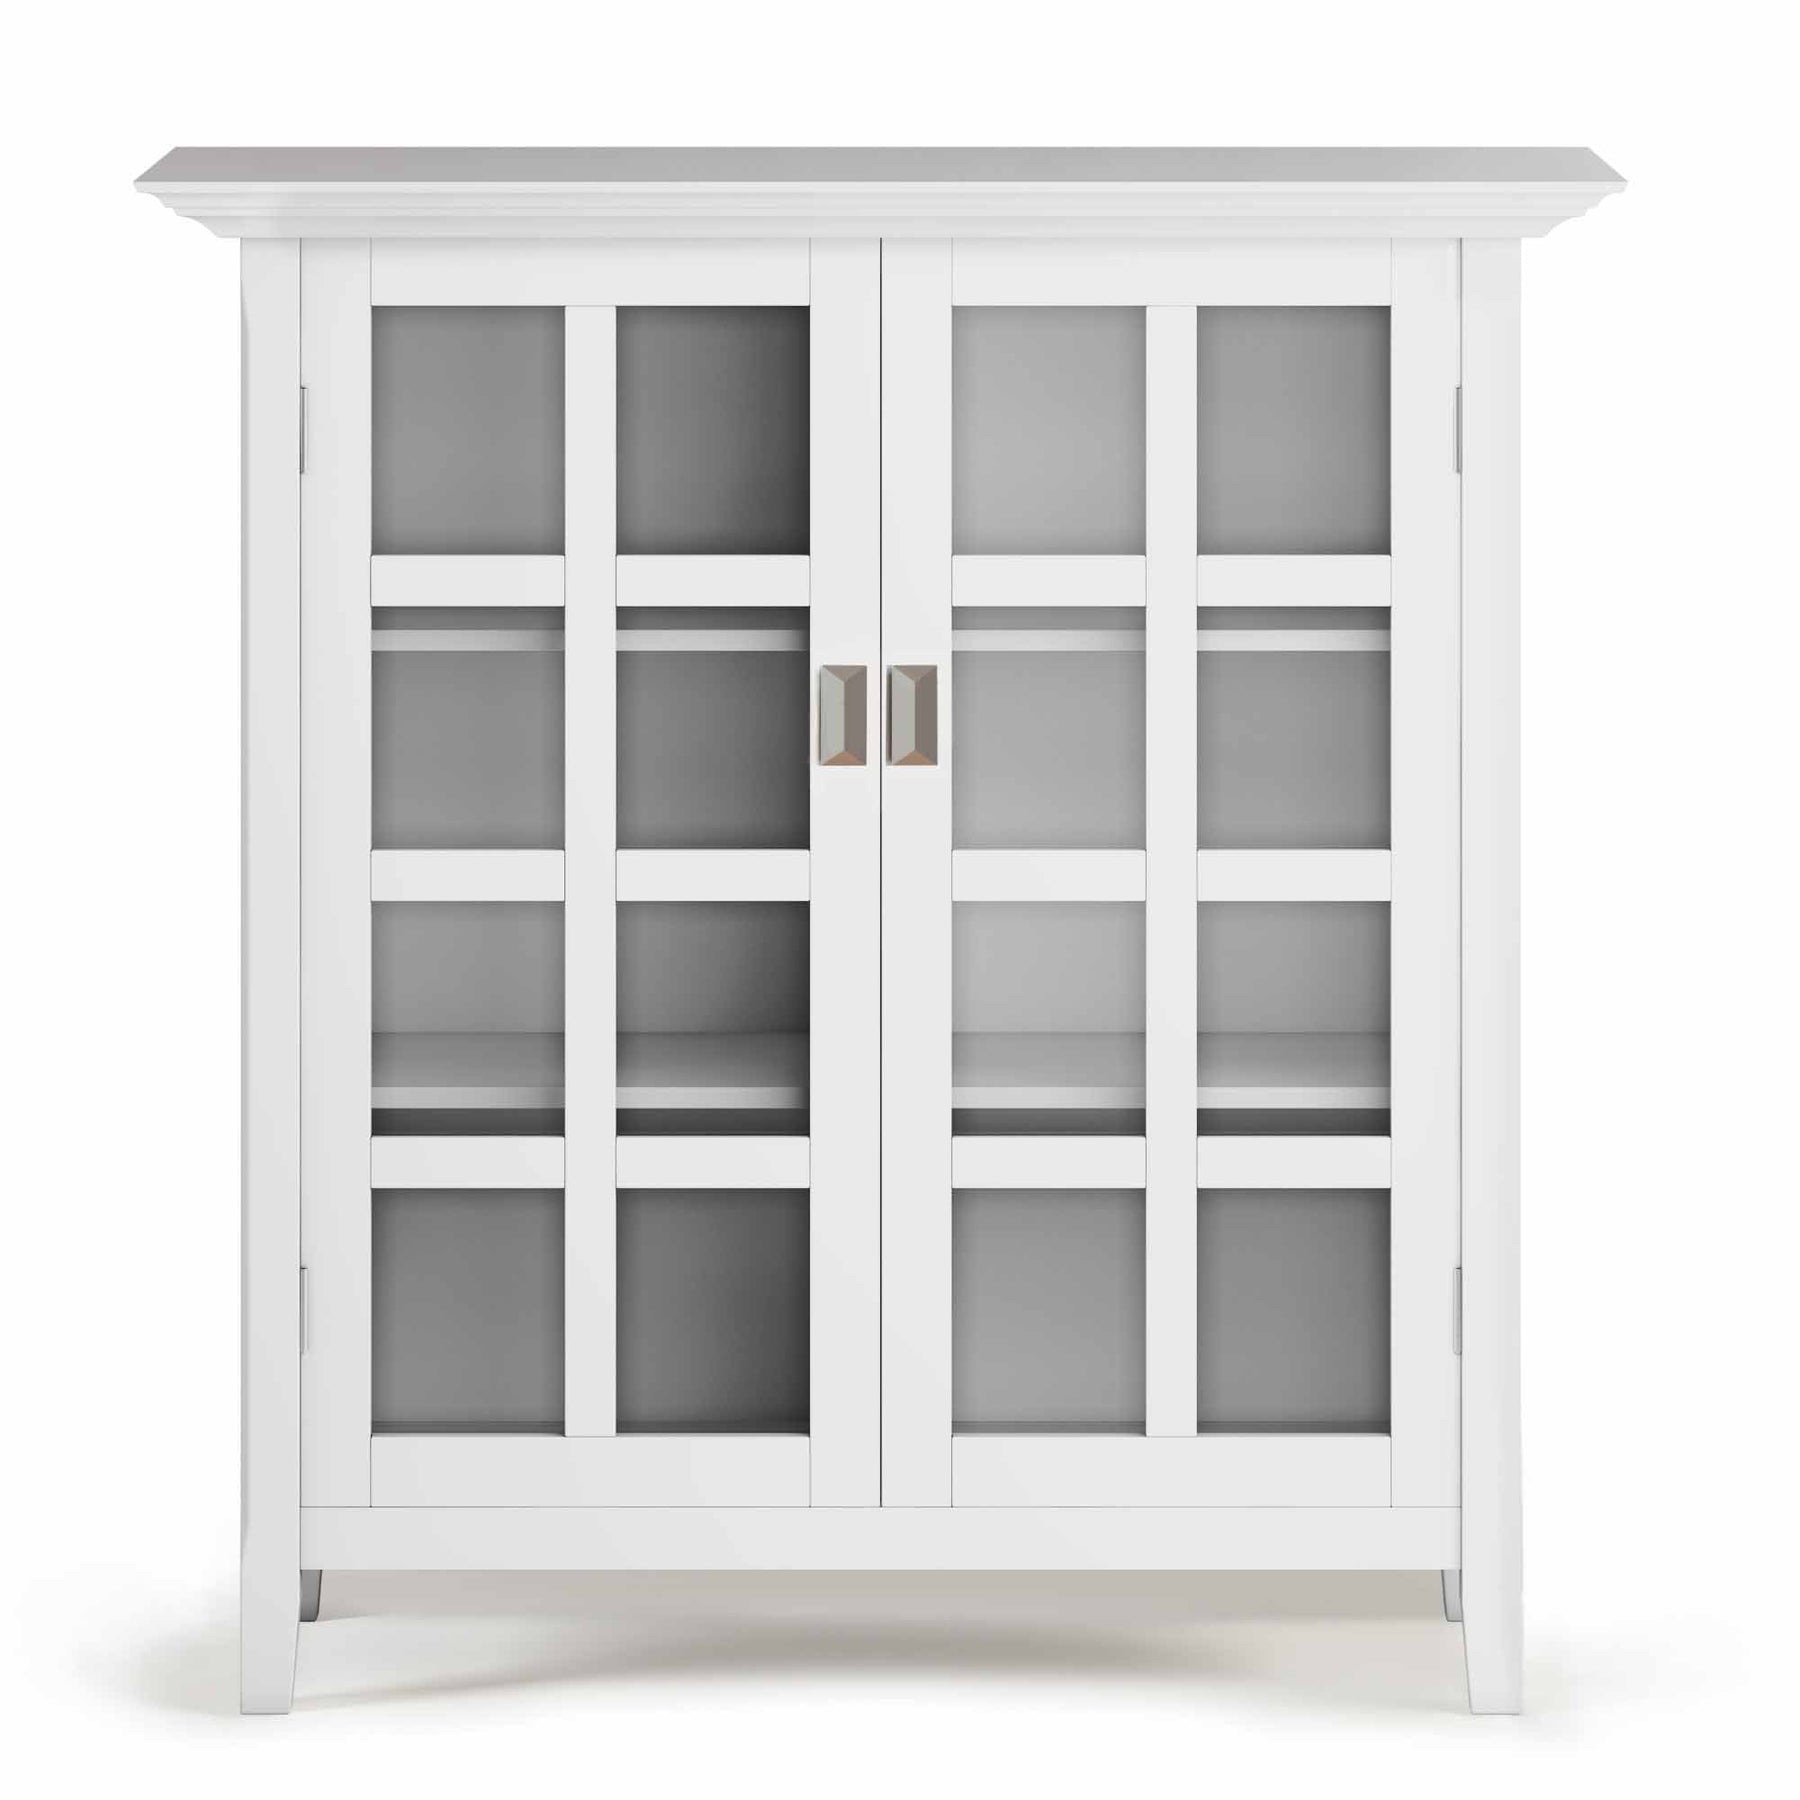 White | Artisan Medium Storage Cabinet